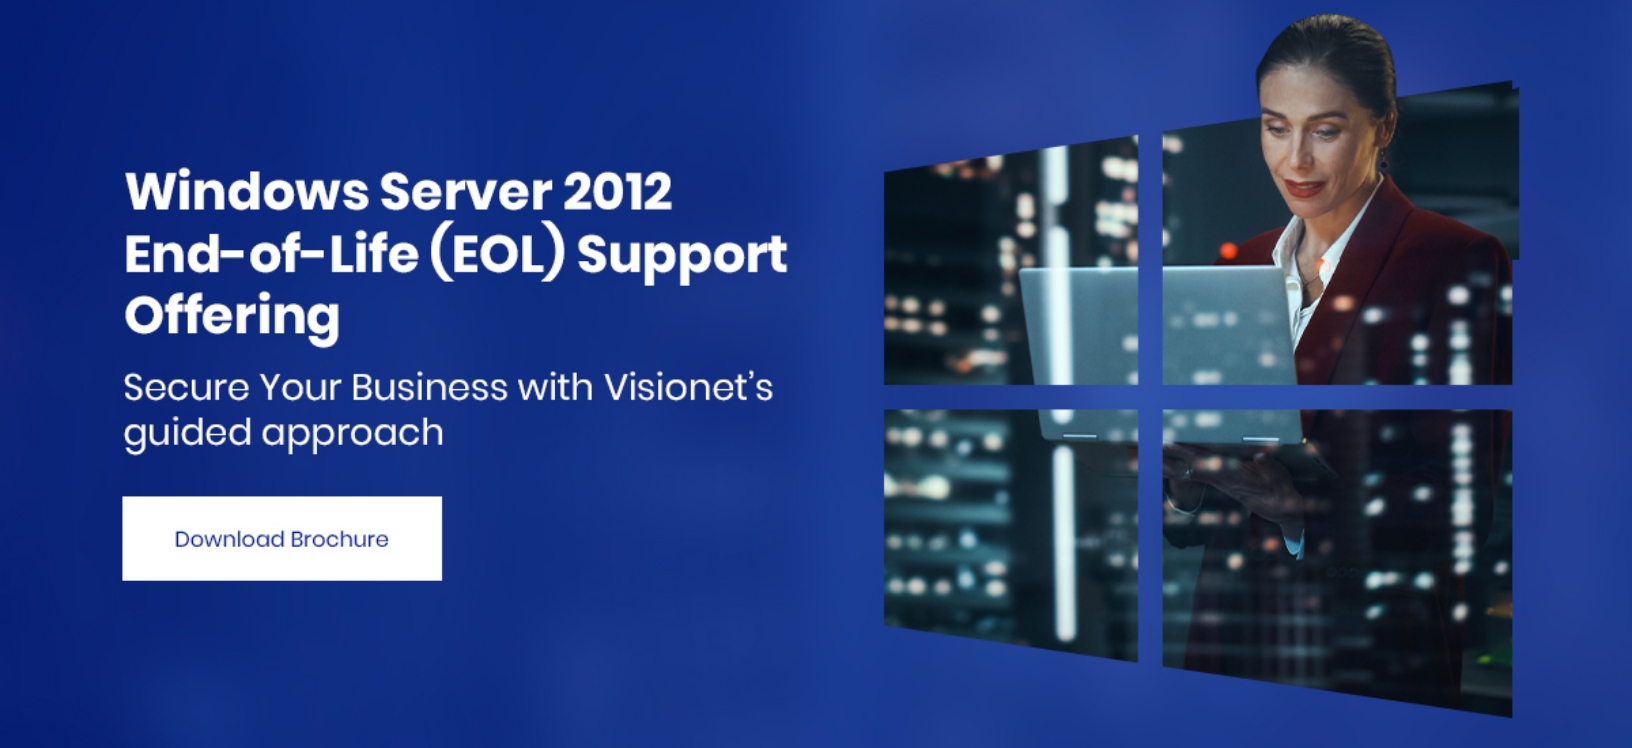 Windows Server 2012 End-of-Life